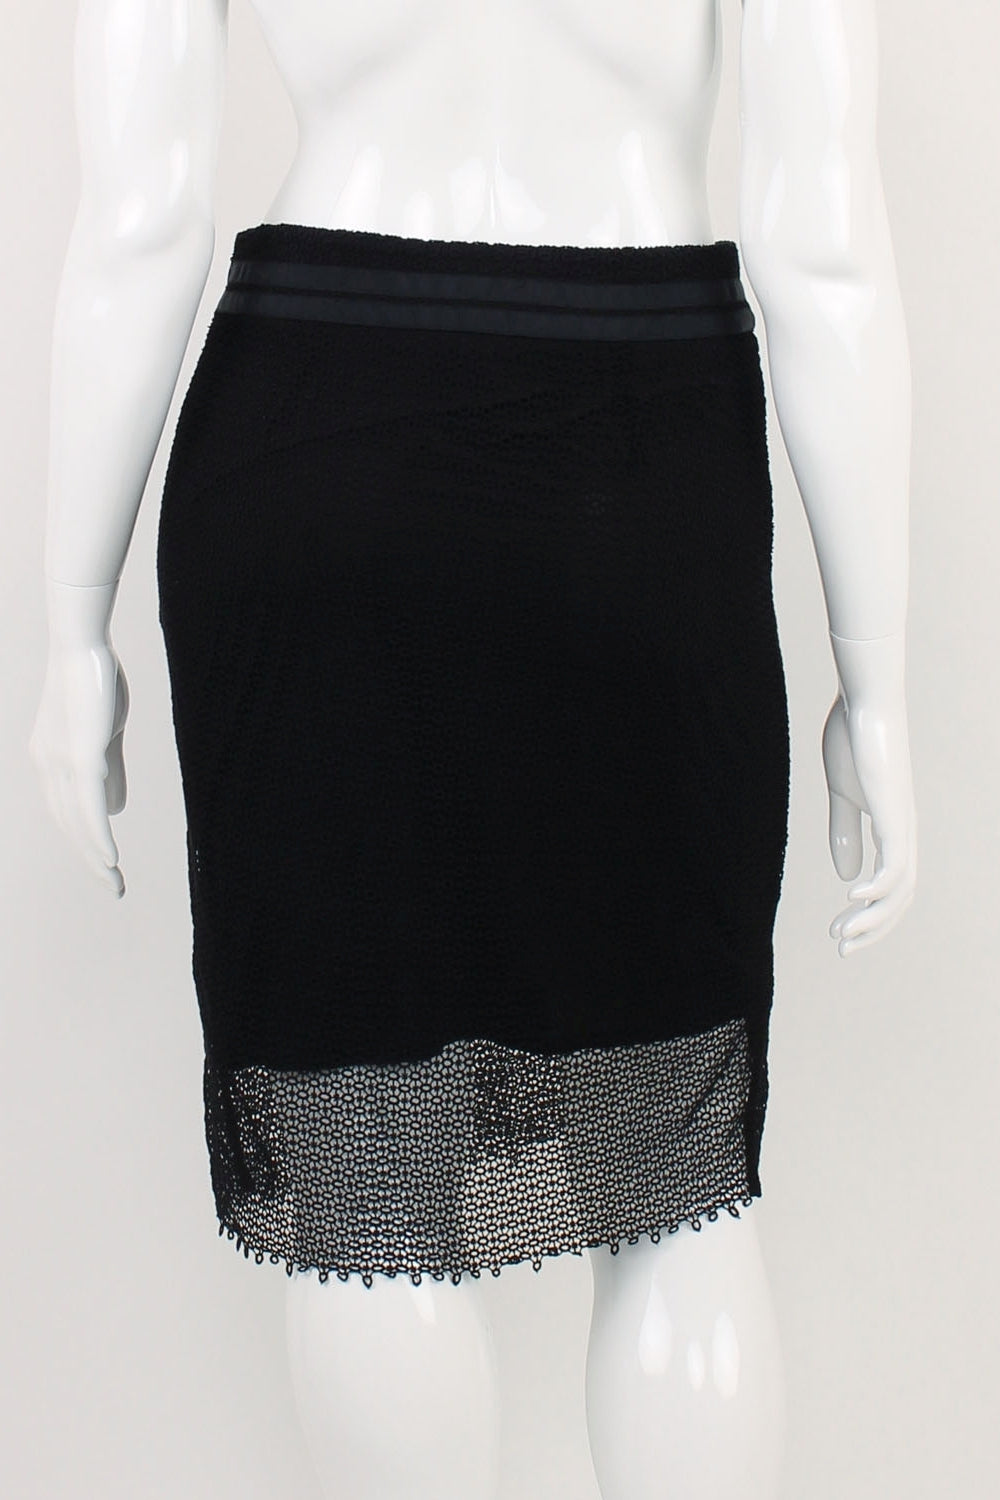 Witchery Black Crochet Skirt 14